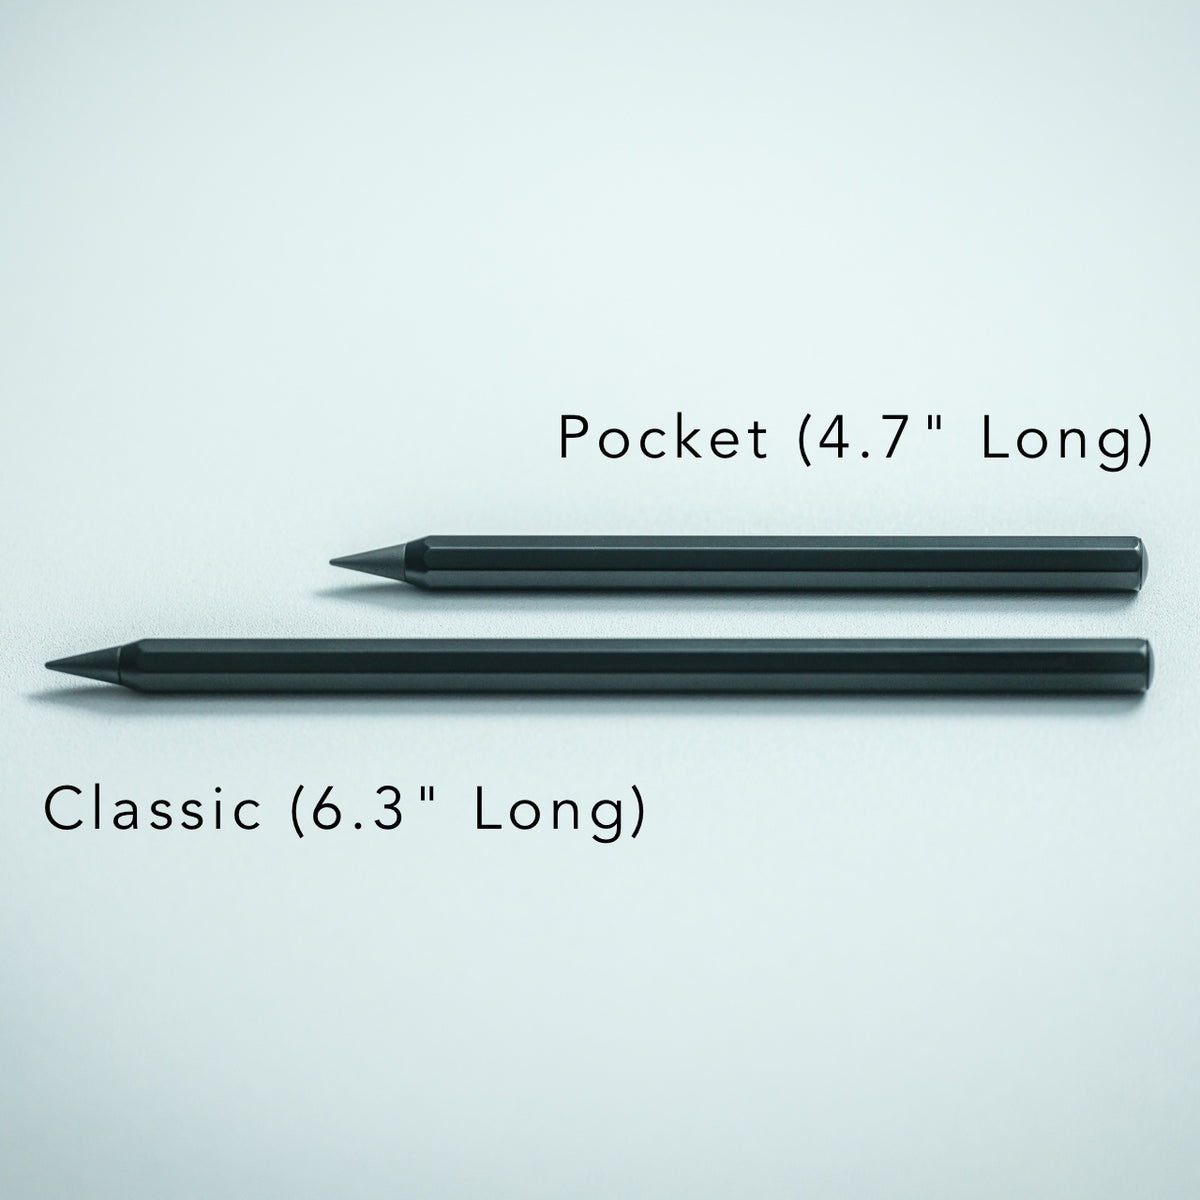 Pocket Everlasting All-Metal Pencil